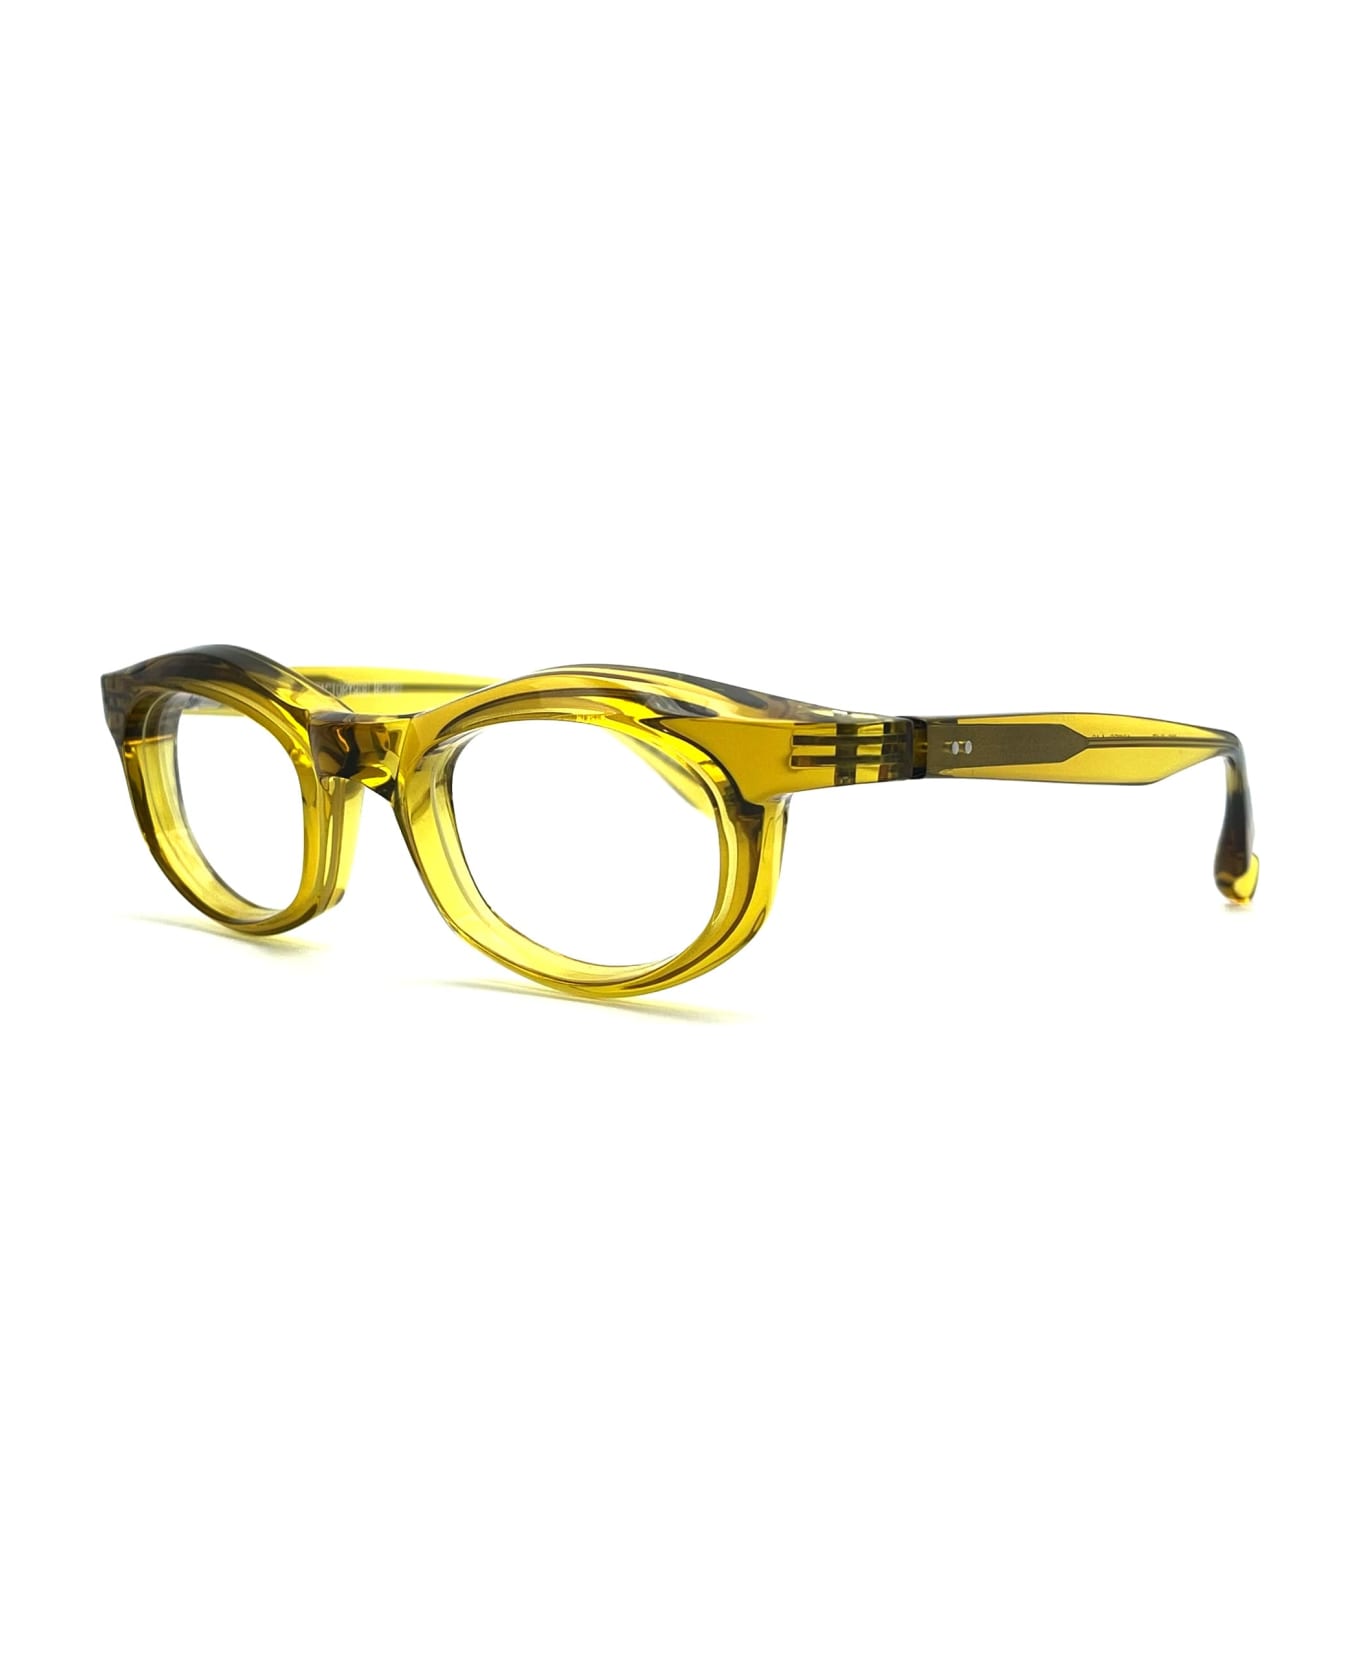 FACTORY900 Rf 043-615 Glasses - yellow trasparent